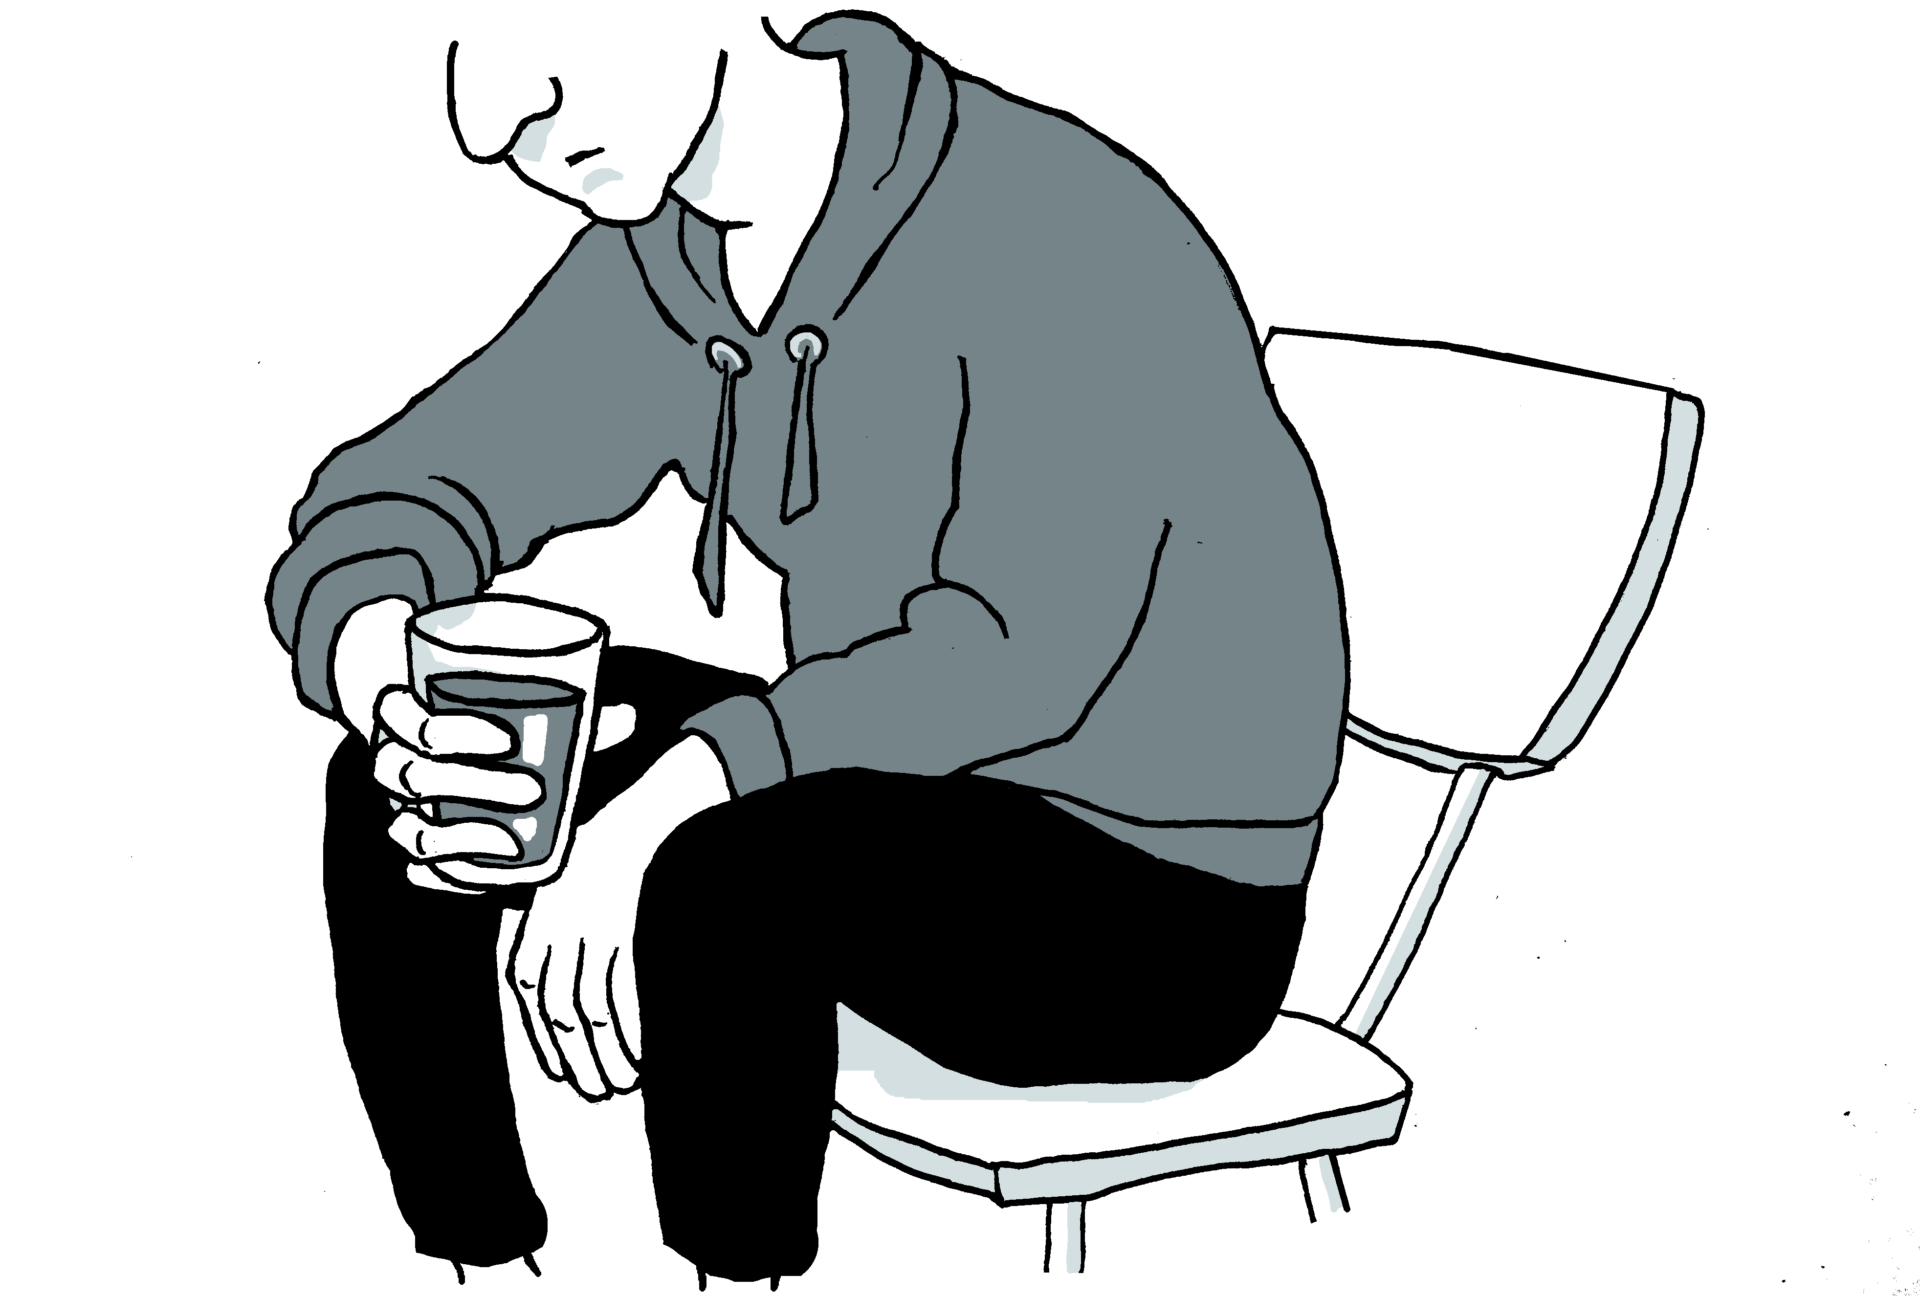 Apea piirroshahmo istuu tuolilla selkä kyyryssä ja lasi kädessä.